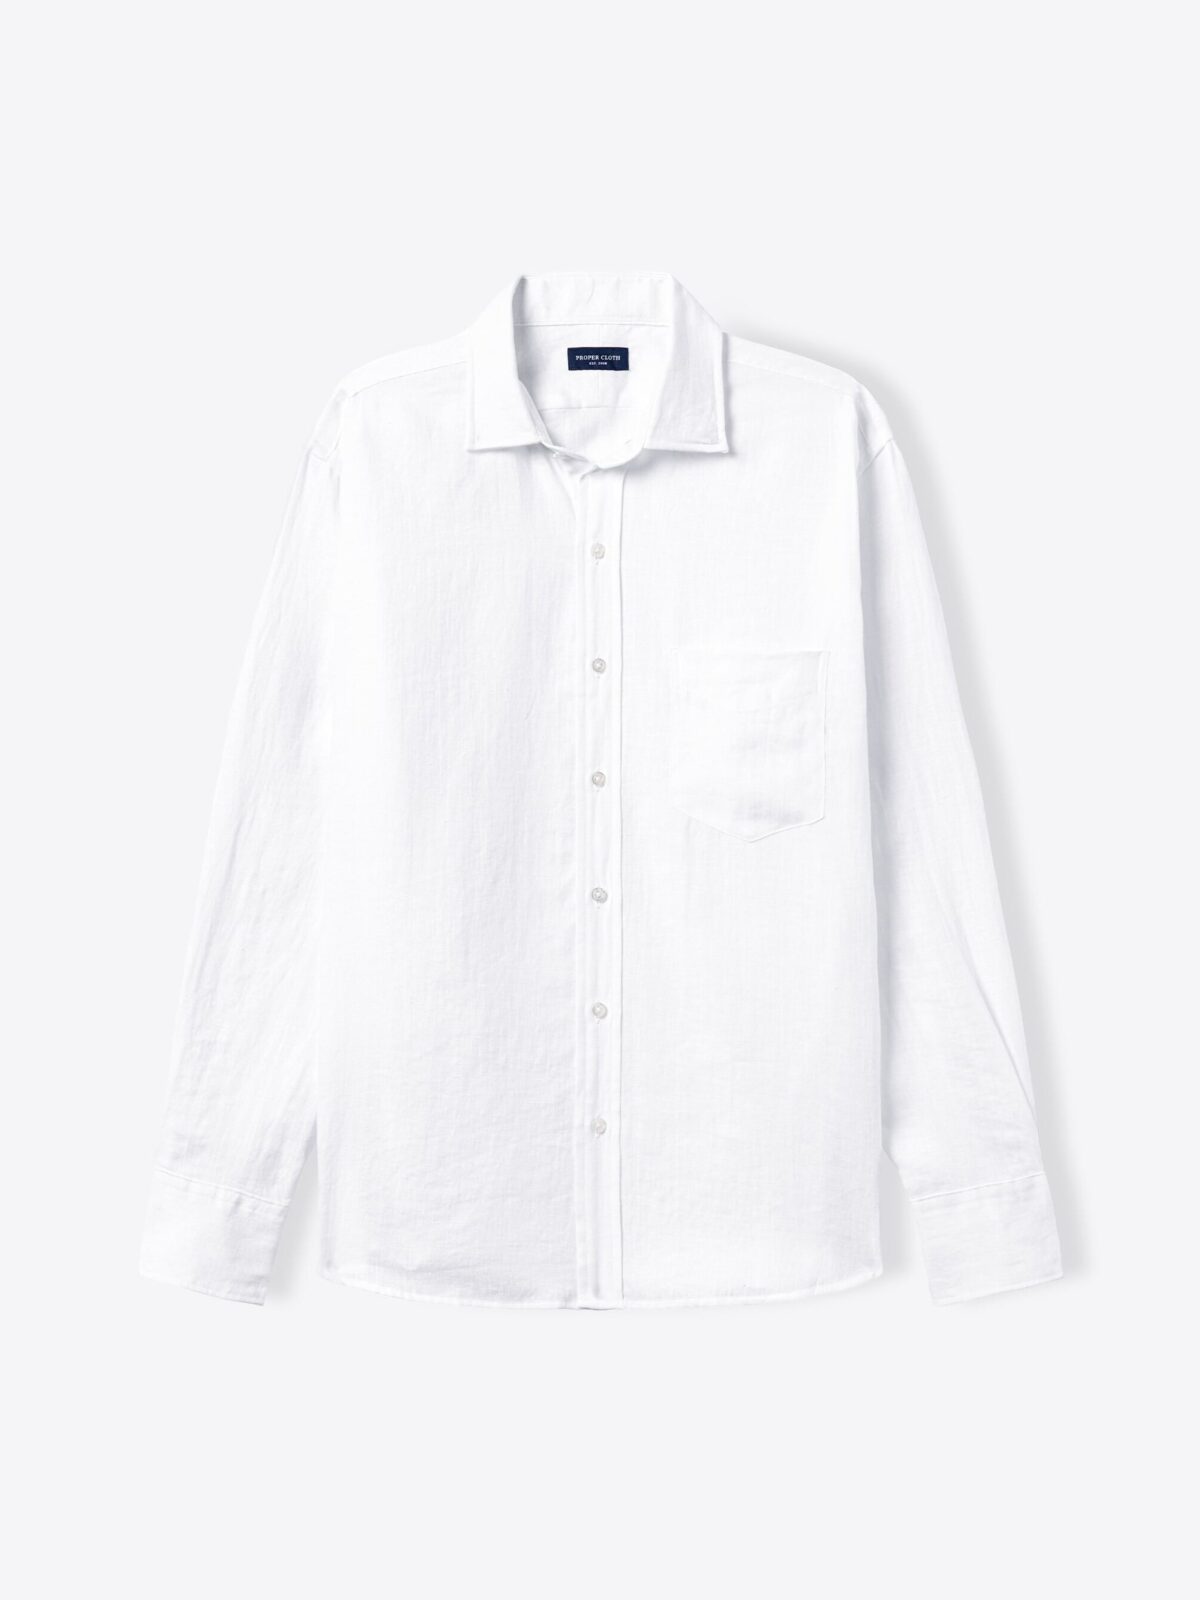 Baird McNutt White Irish Linen Shirt by Proper Cloth